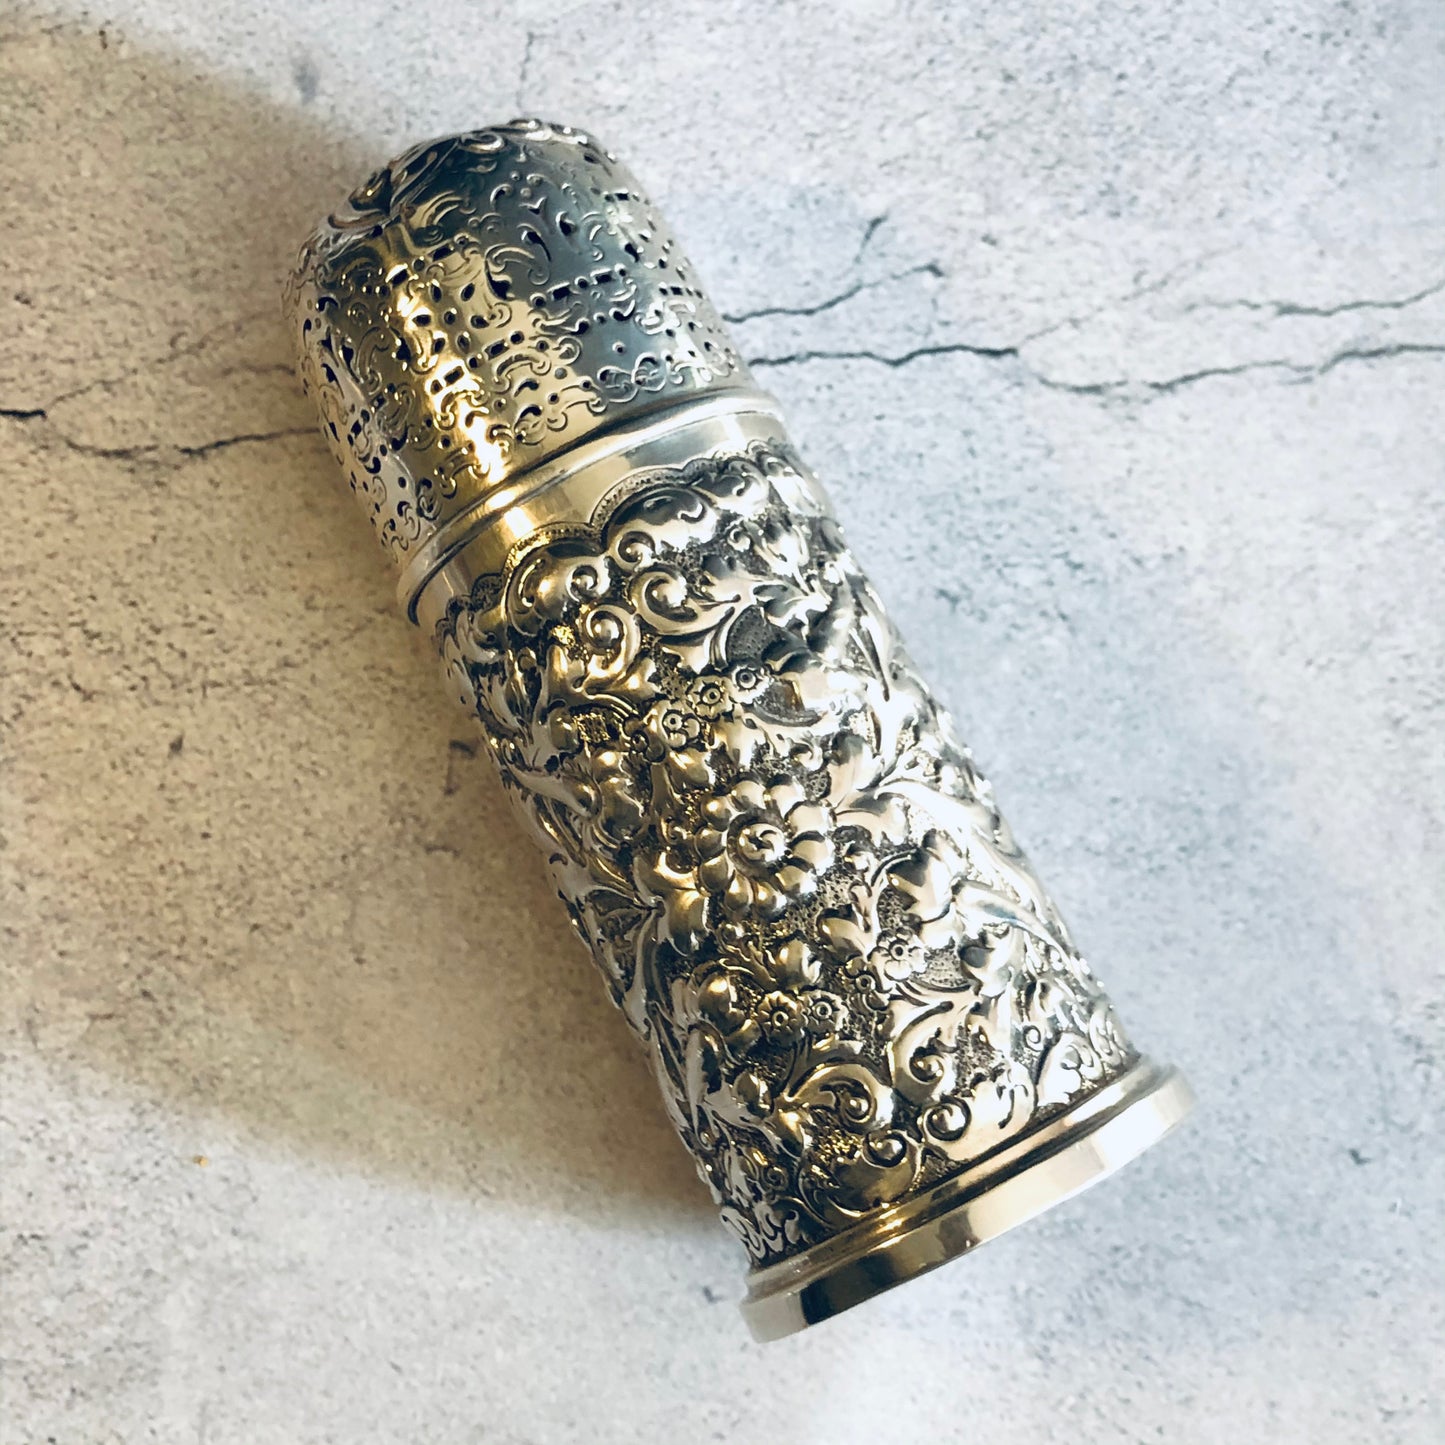 Antique Silver Repose Sugar Shaker Hallmark London 1890